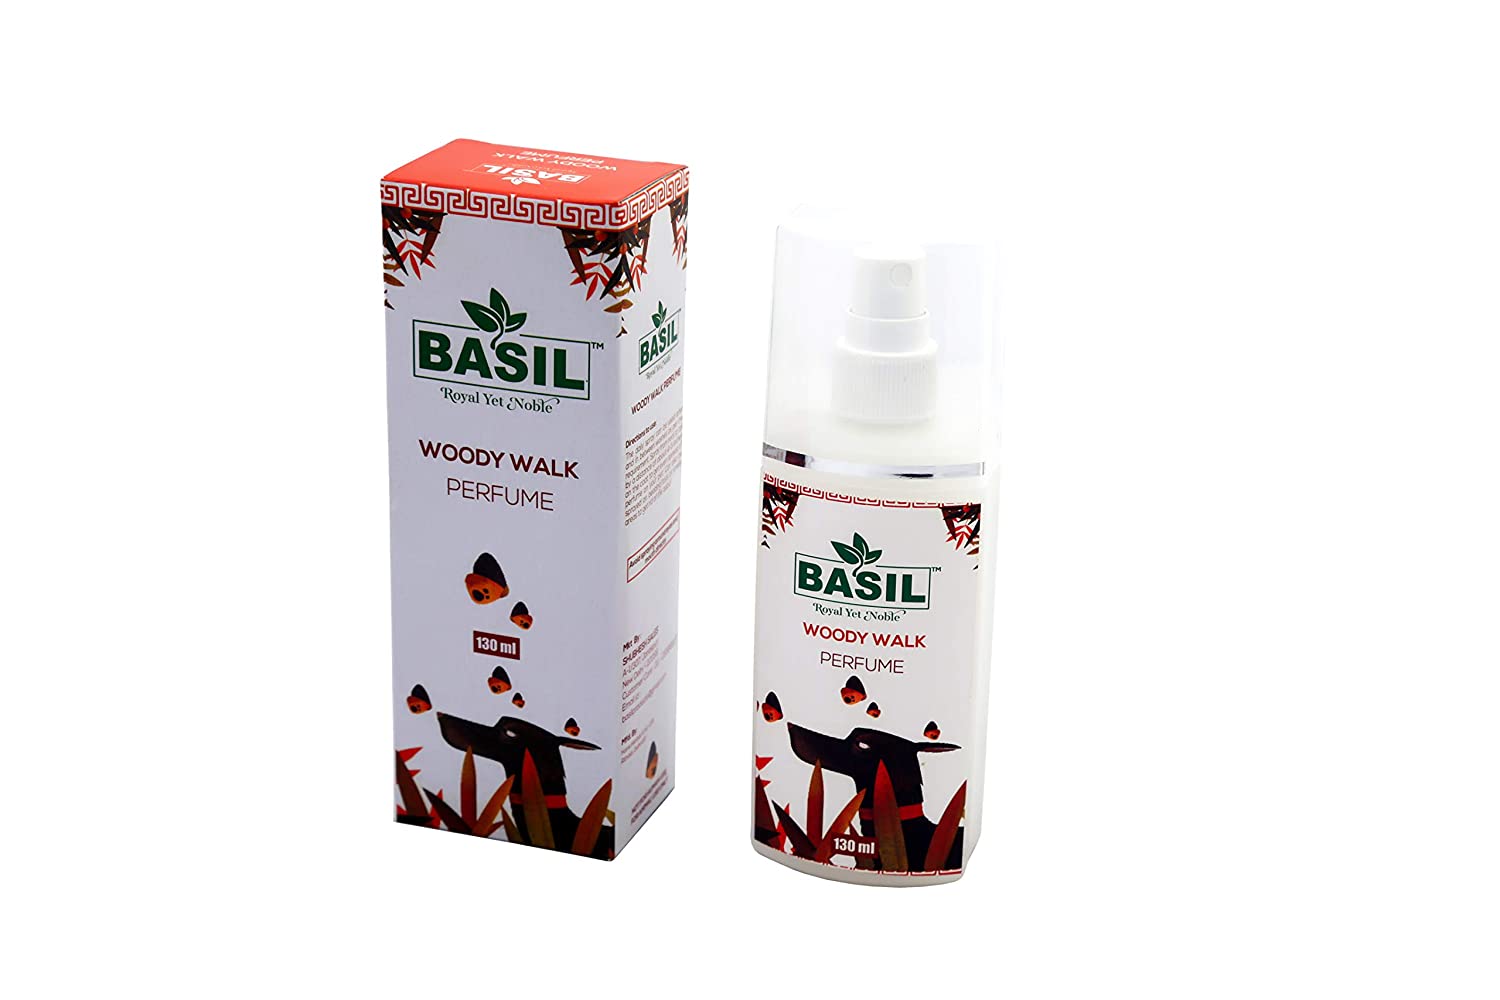 Basil Pet Perfume Woddy walk 130 ML (Pack of 2)